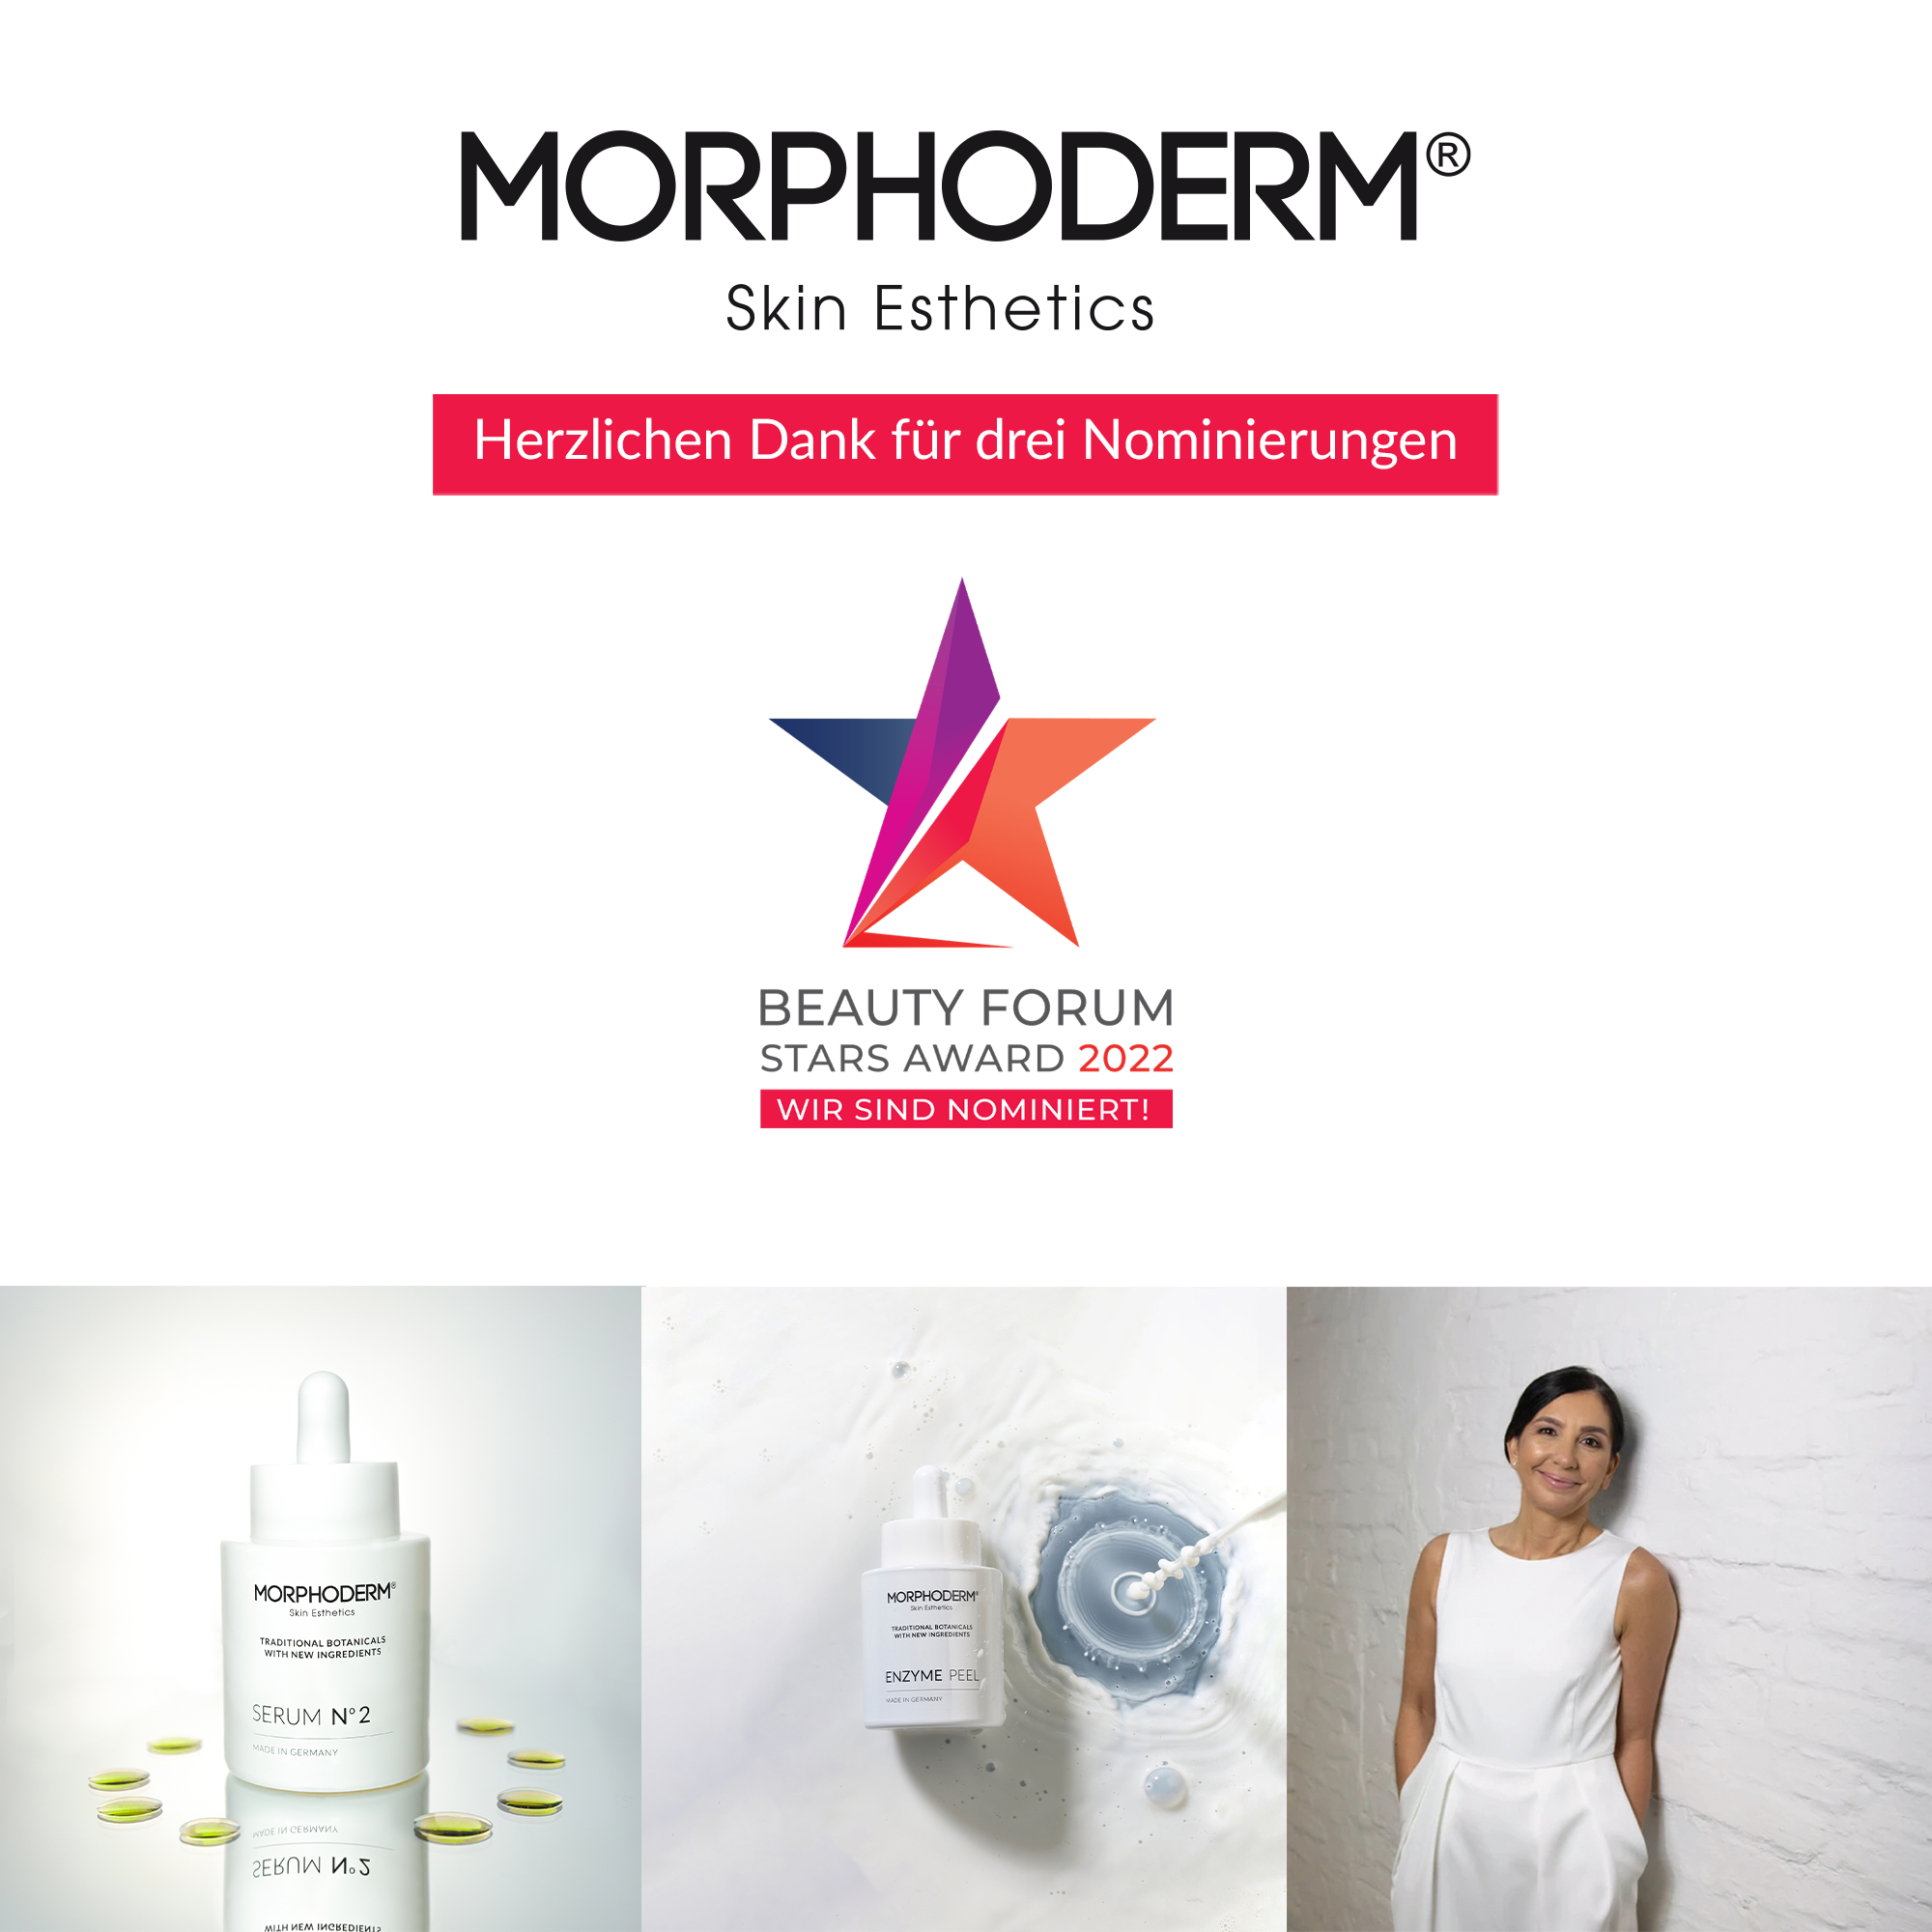 Morphoderm Skin Esthetics